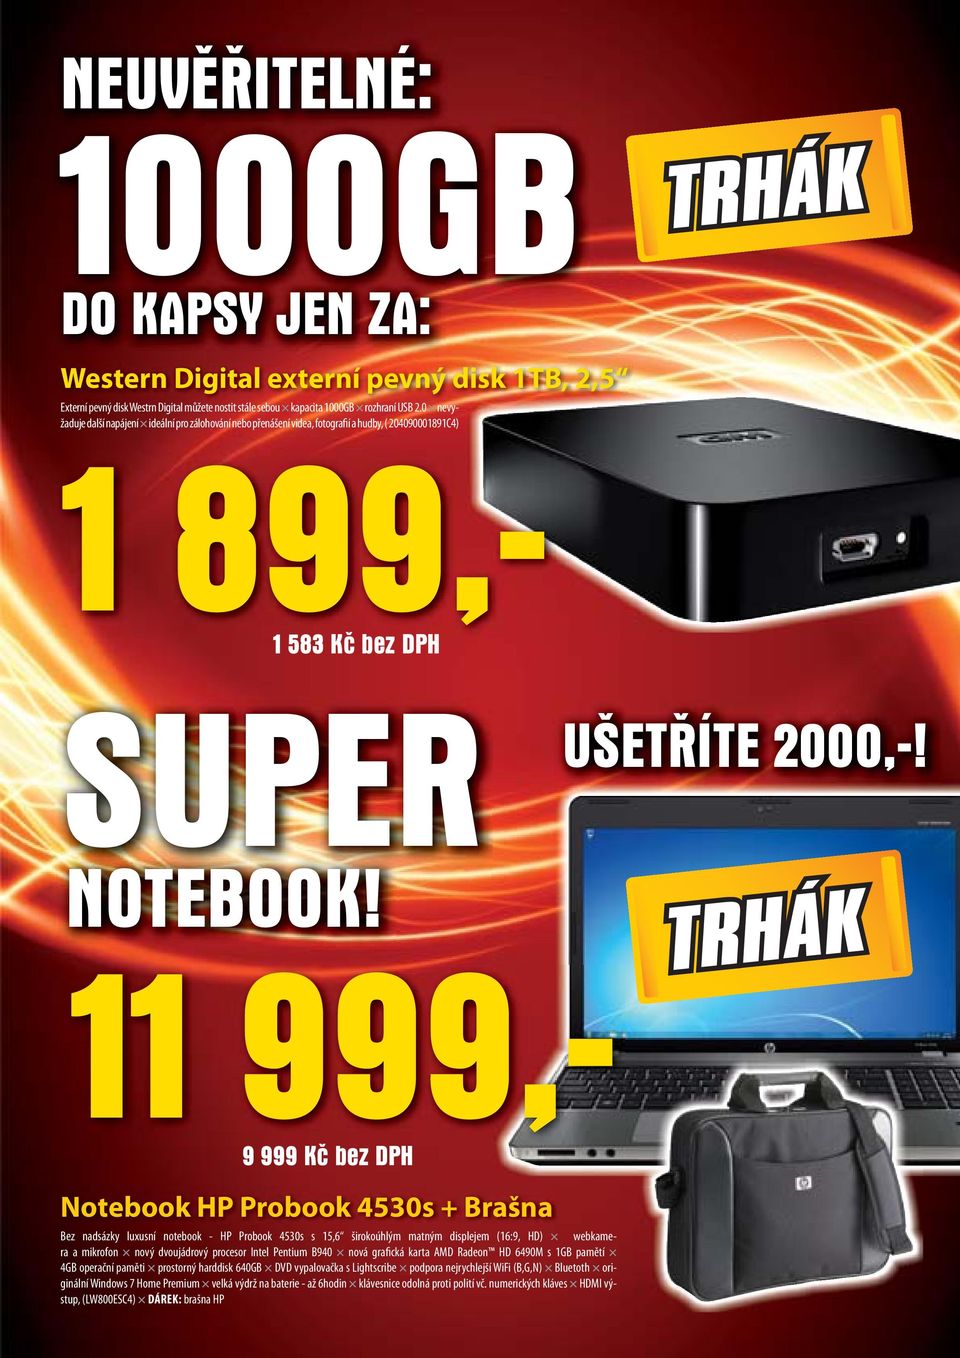 11 999,- 9 999 Kč bez DPH TRHÁK Notebook HP Probook 4530s + Brašna Bez nadsázky luxusní notebook - HP Probook 4530s s 15,6 širokoúhlým matným displejem (16:9, HD) webkamera a mikrofon nový